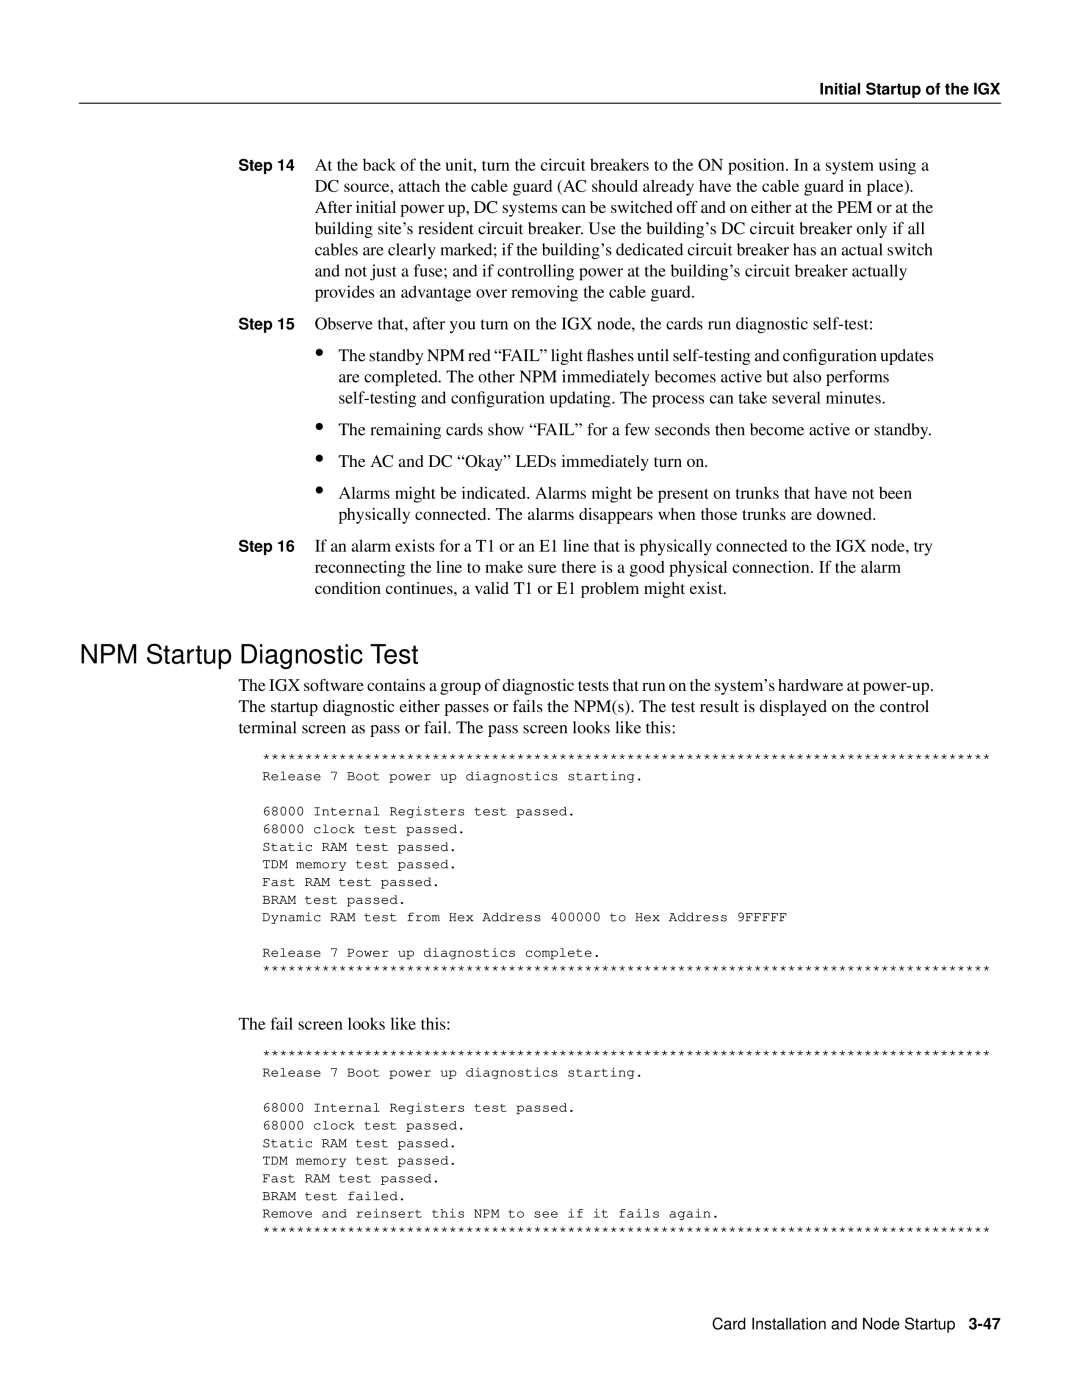 Cisco Systems IGX 8400 Series manual NPM Startup Diagnostic Test 